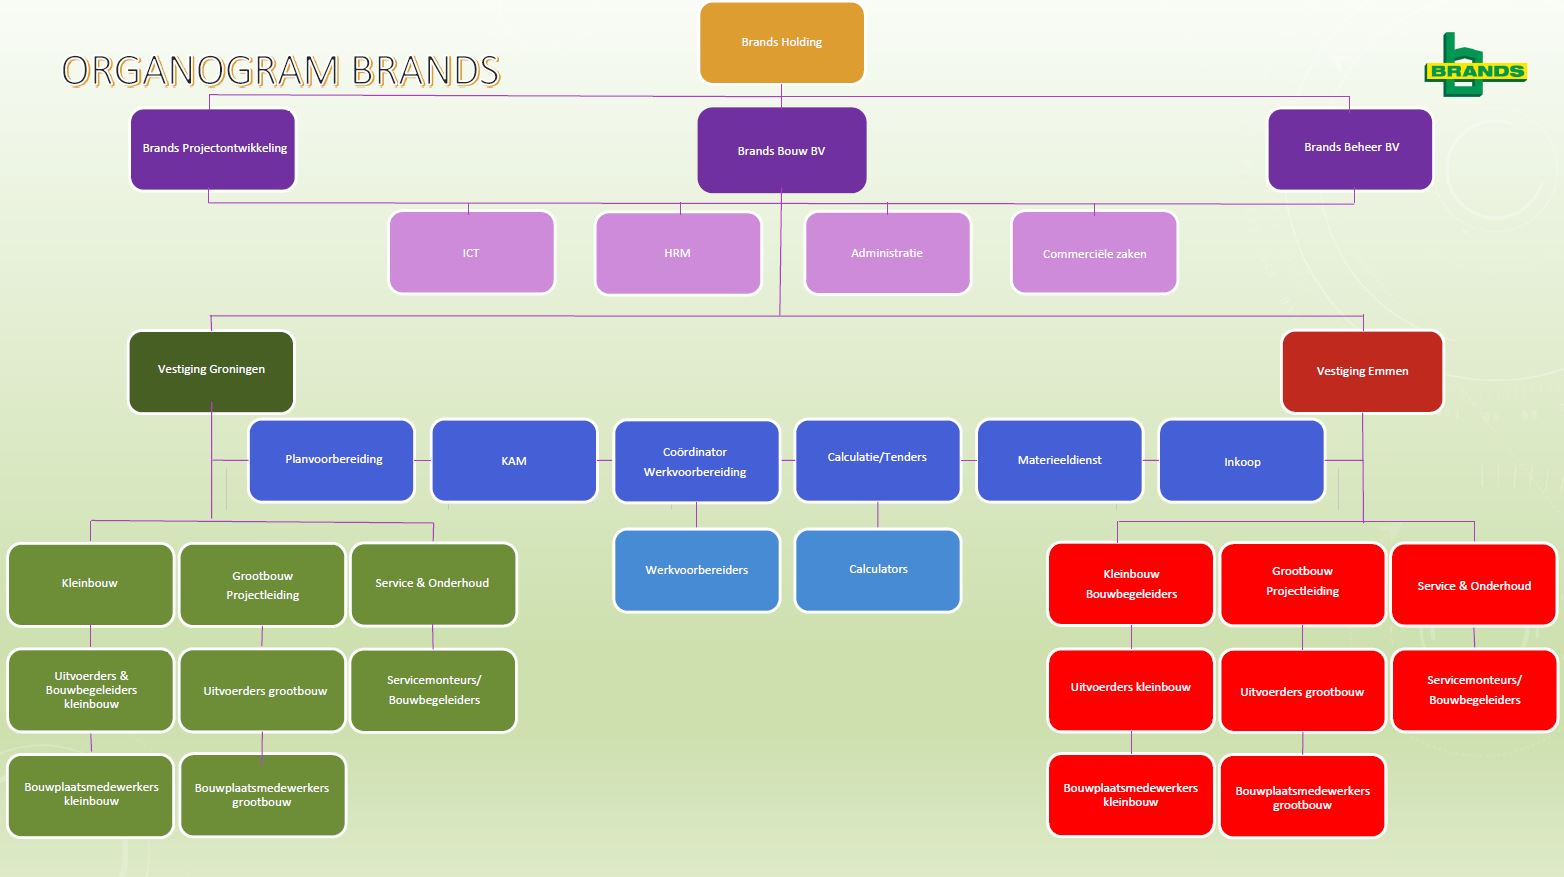 Organogram Brands